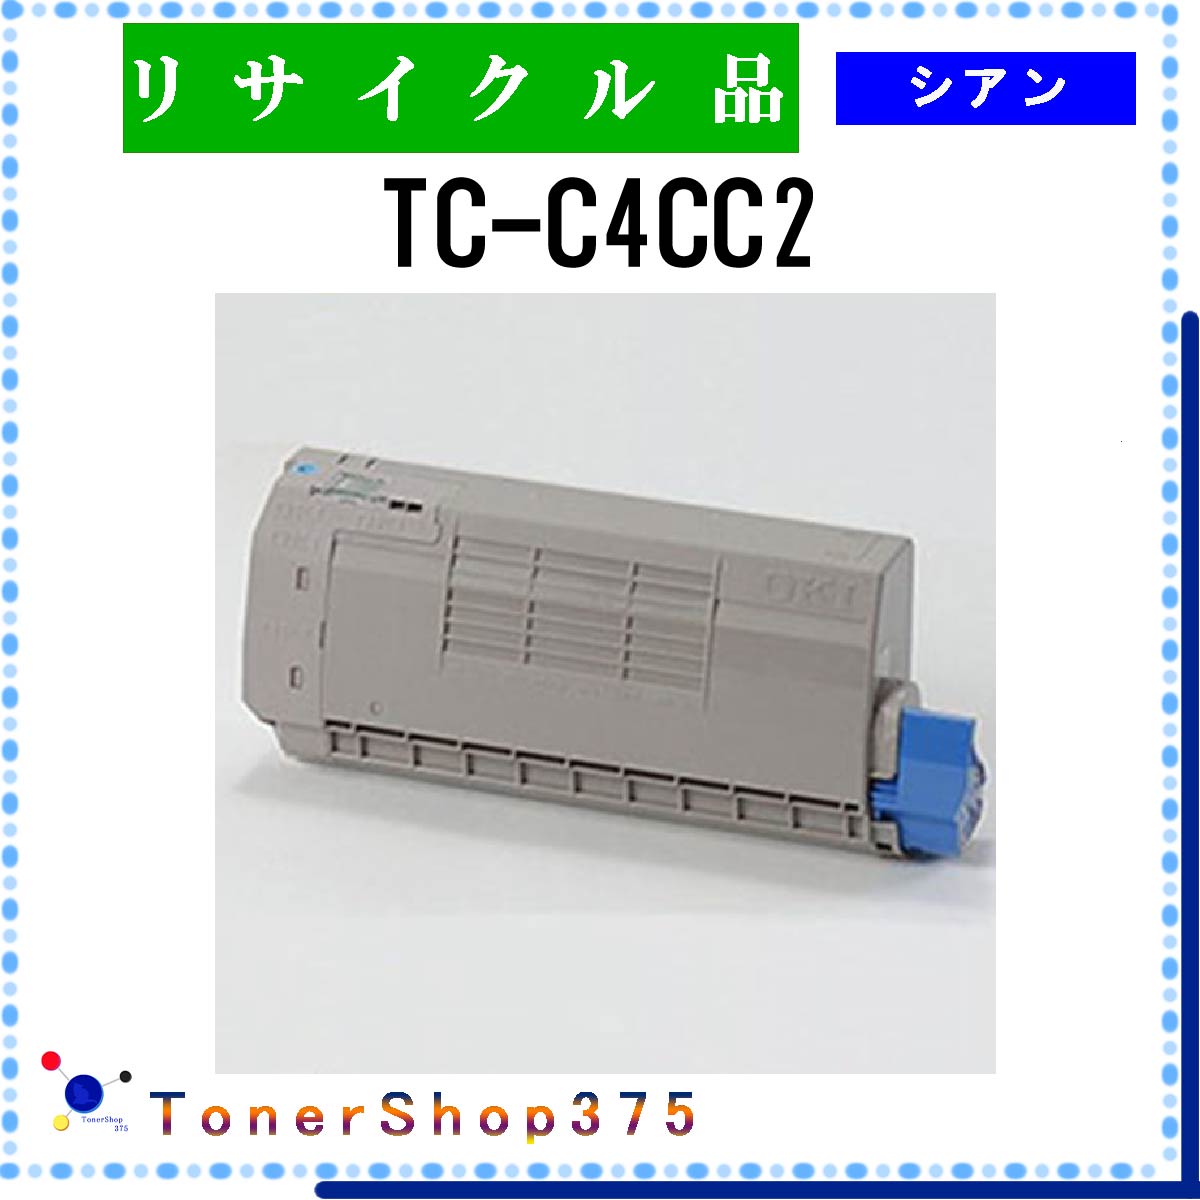 OKI y TC-C4CC2 z VA TCN gi[ TCNHƉFH蒼 STMCF ݌ɕi 